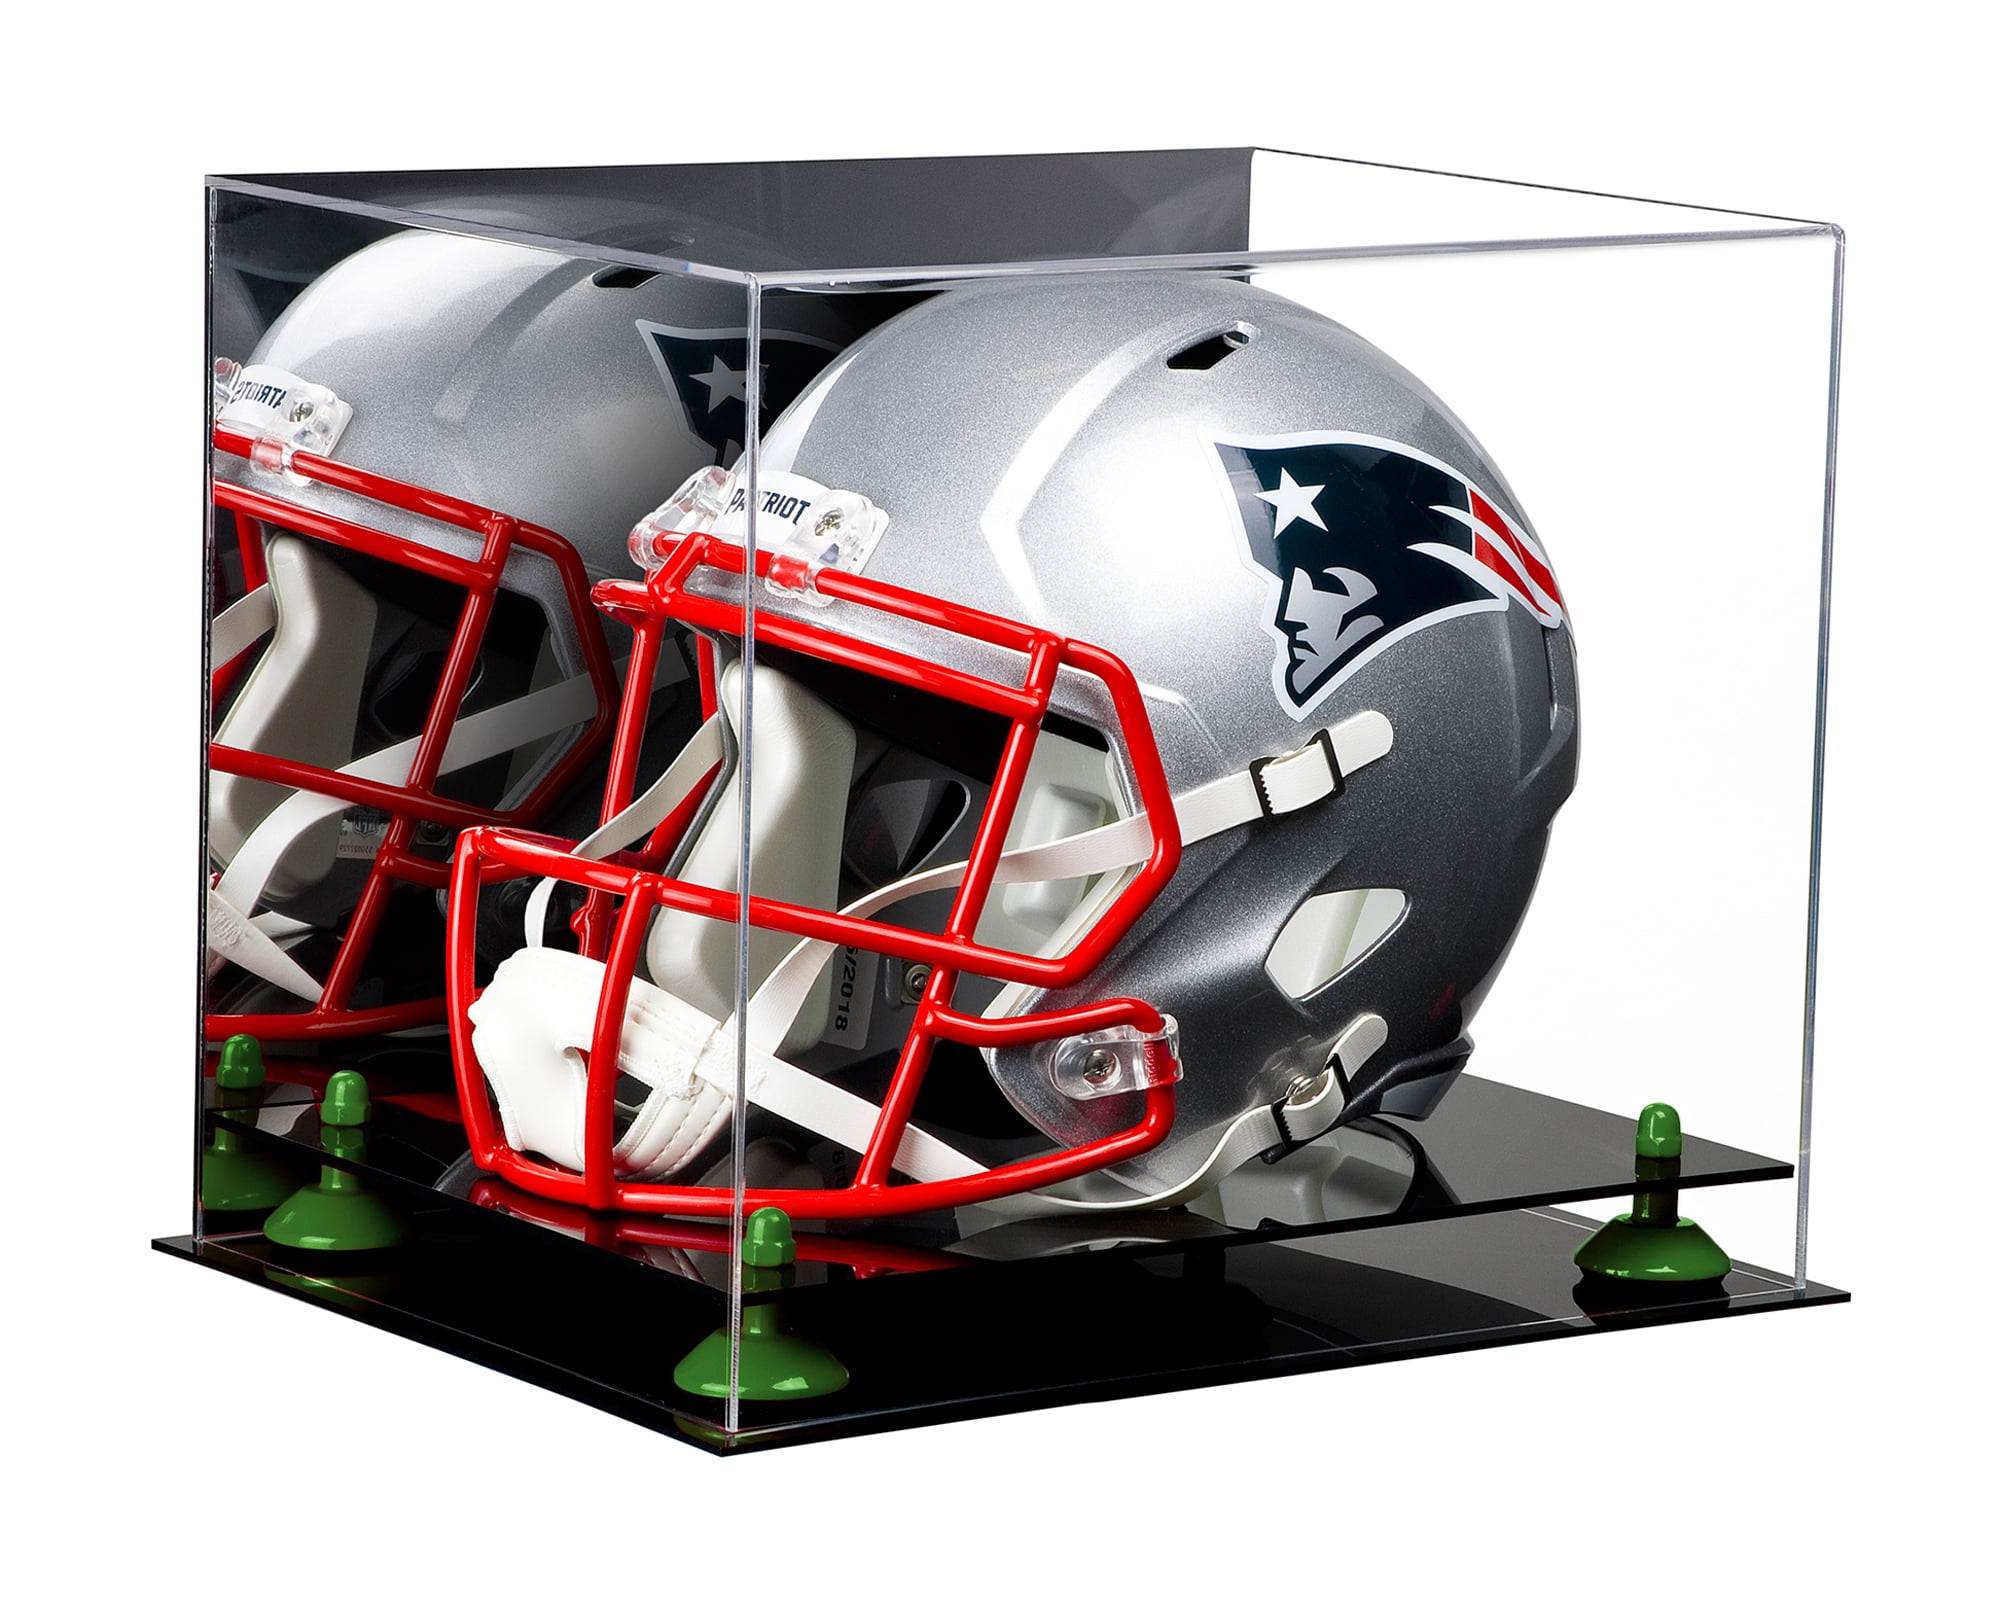 BillyJoe Football Helmet Display Case with All Black Mirror 2-Level Riser Full Size Acrylic Base Showcase Box 15x15x12 